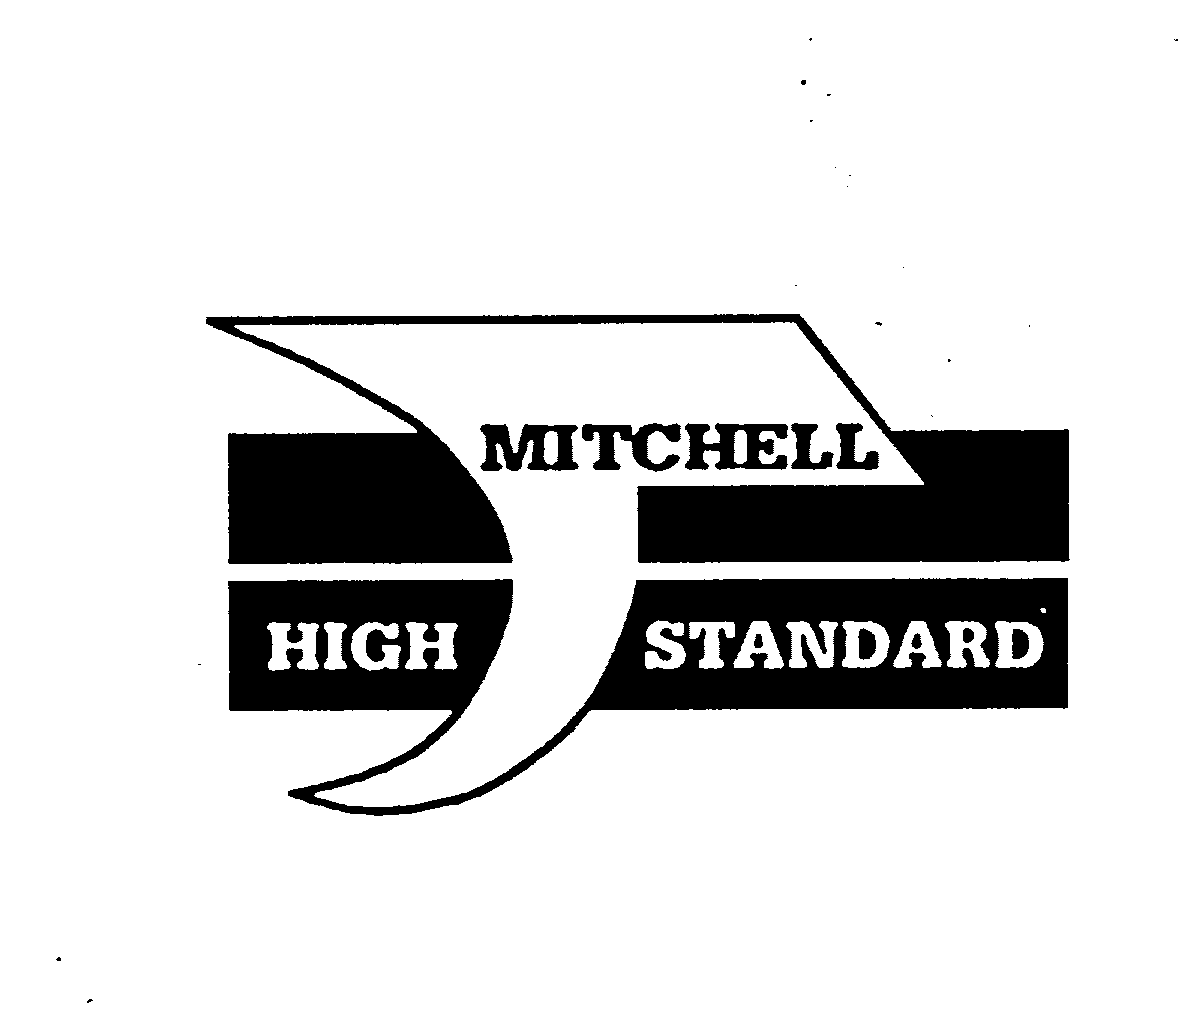 MITCHELL HIGH STANDARD